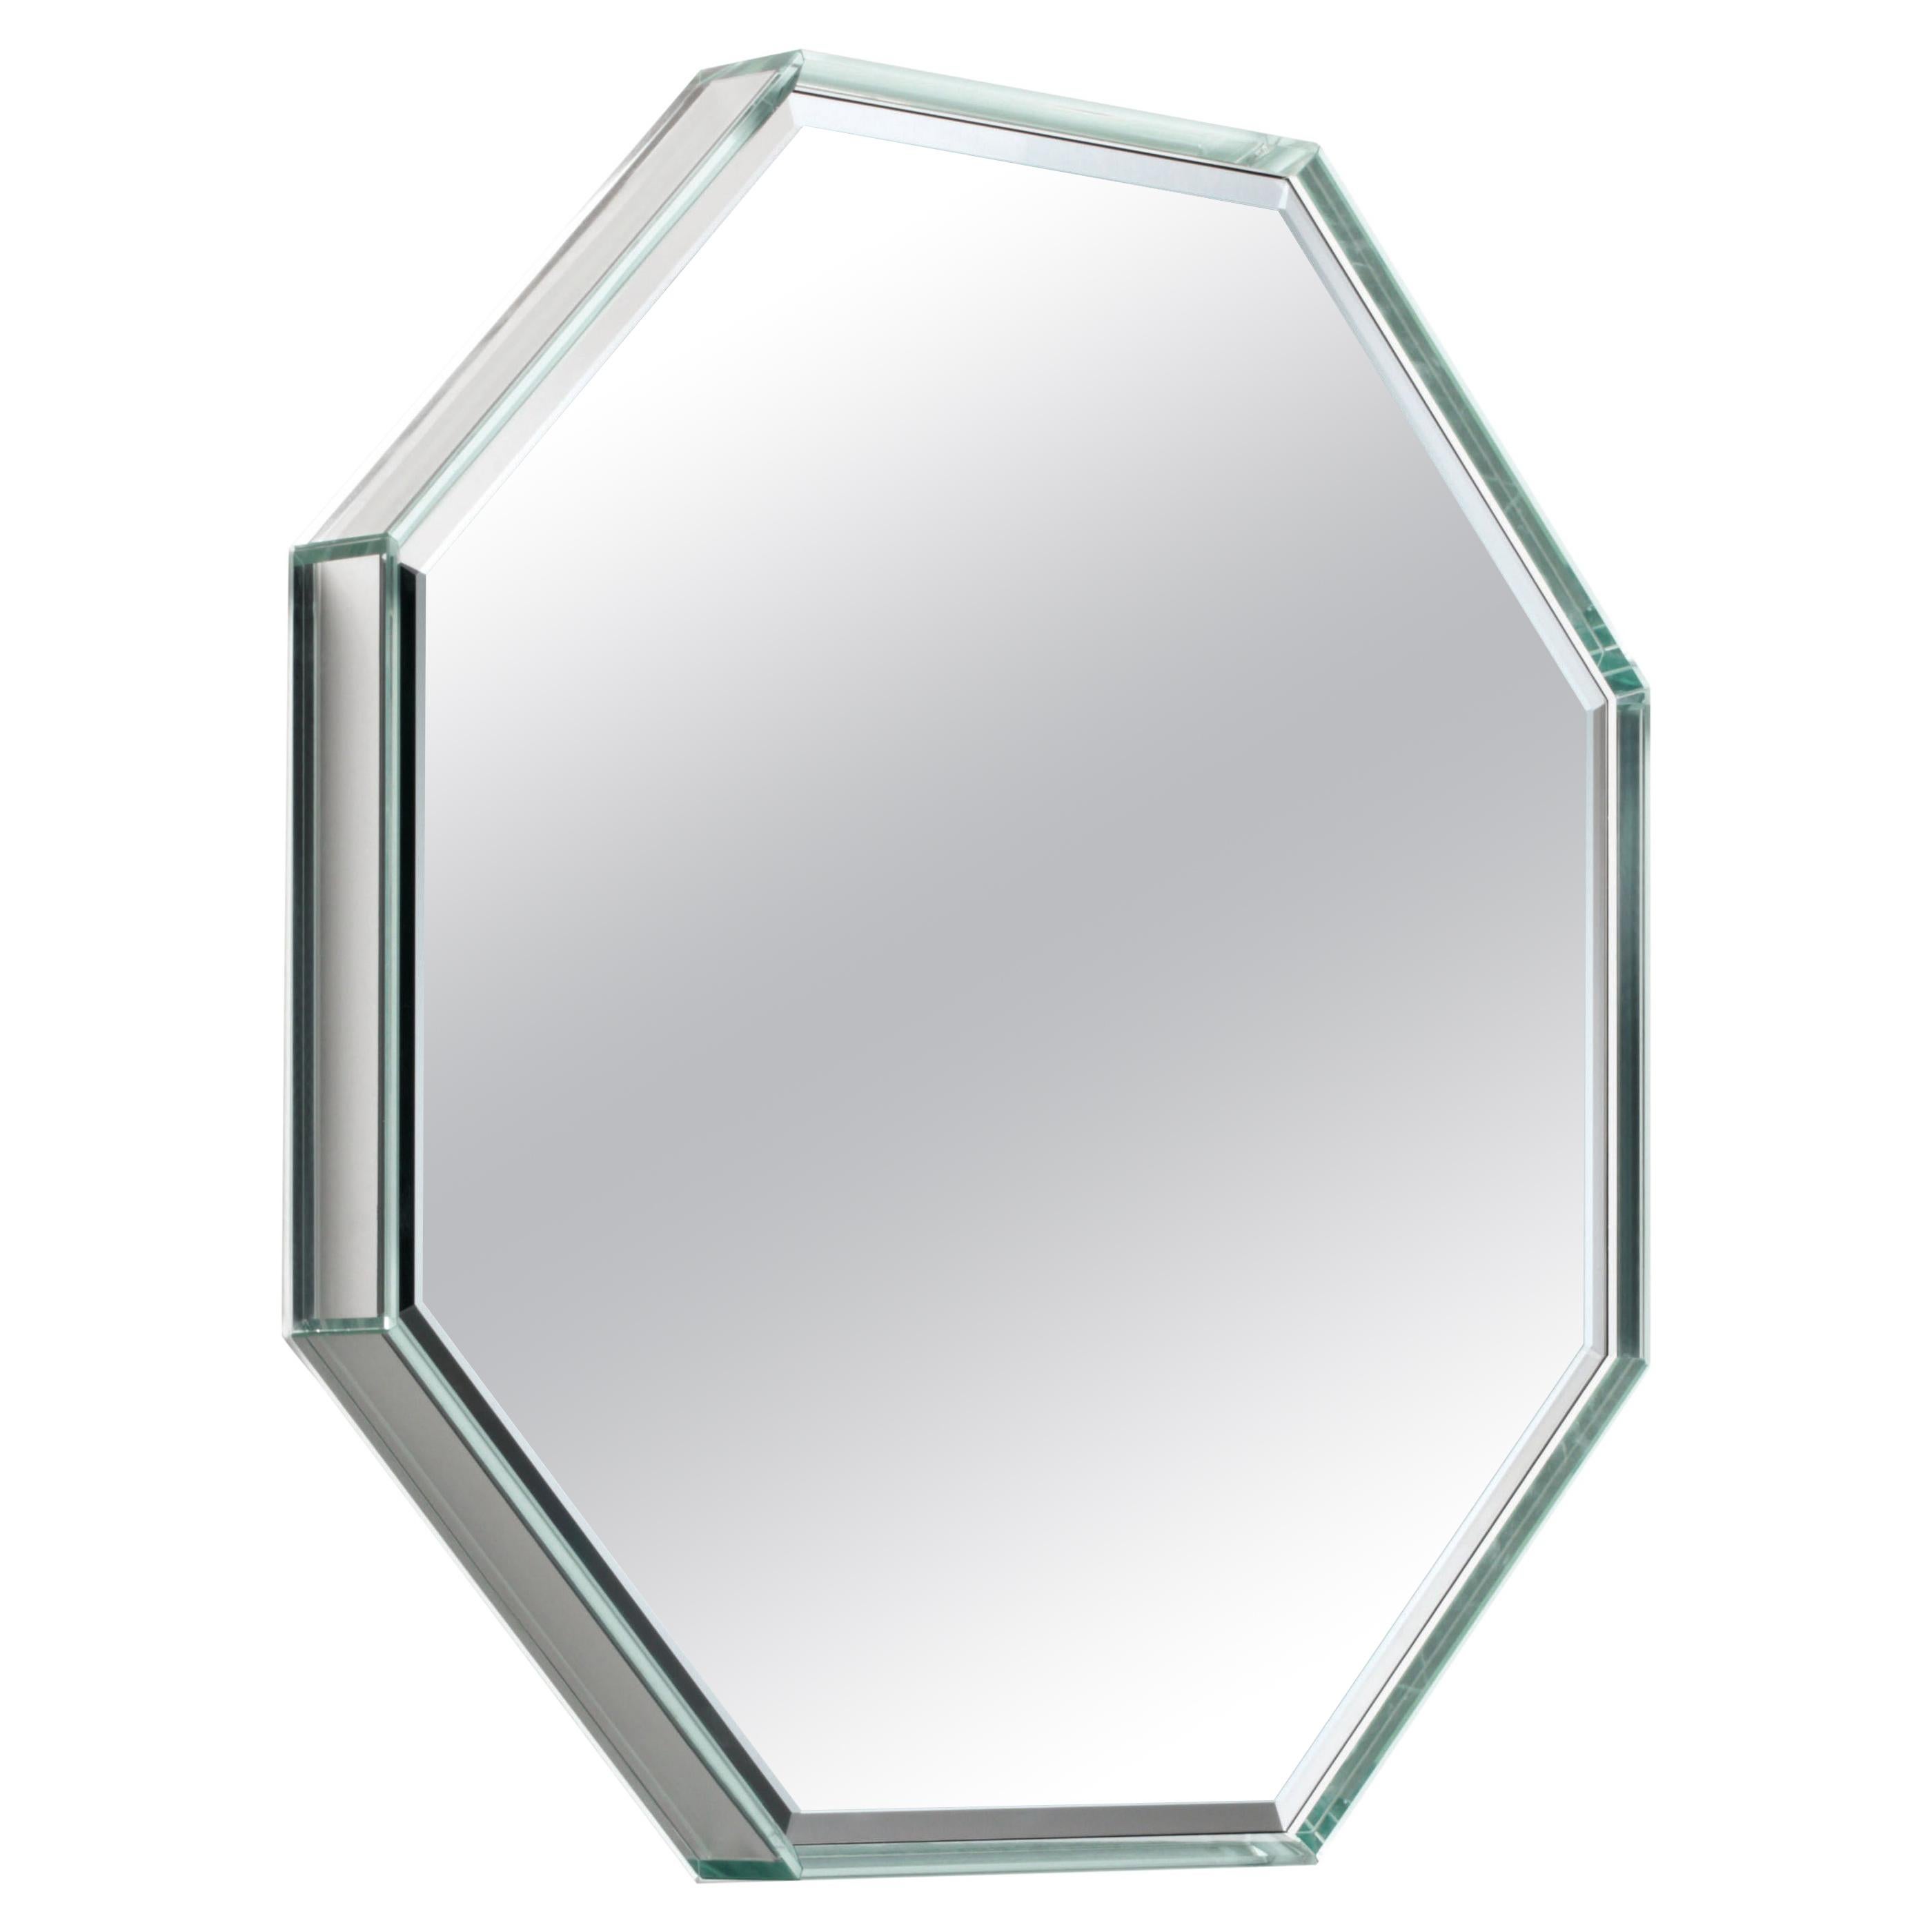 PRISM Mirror Specchi Octagon Wall Mirror, by Tokujin Yoshioka for Glas Italia